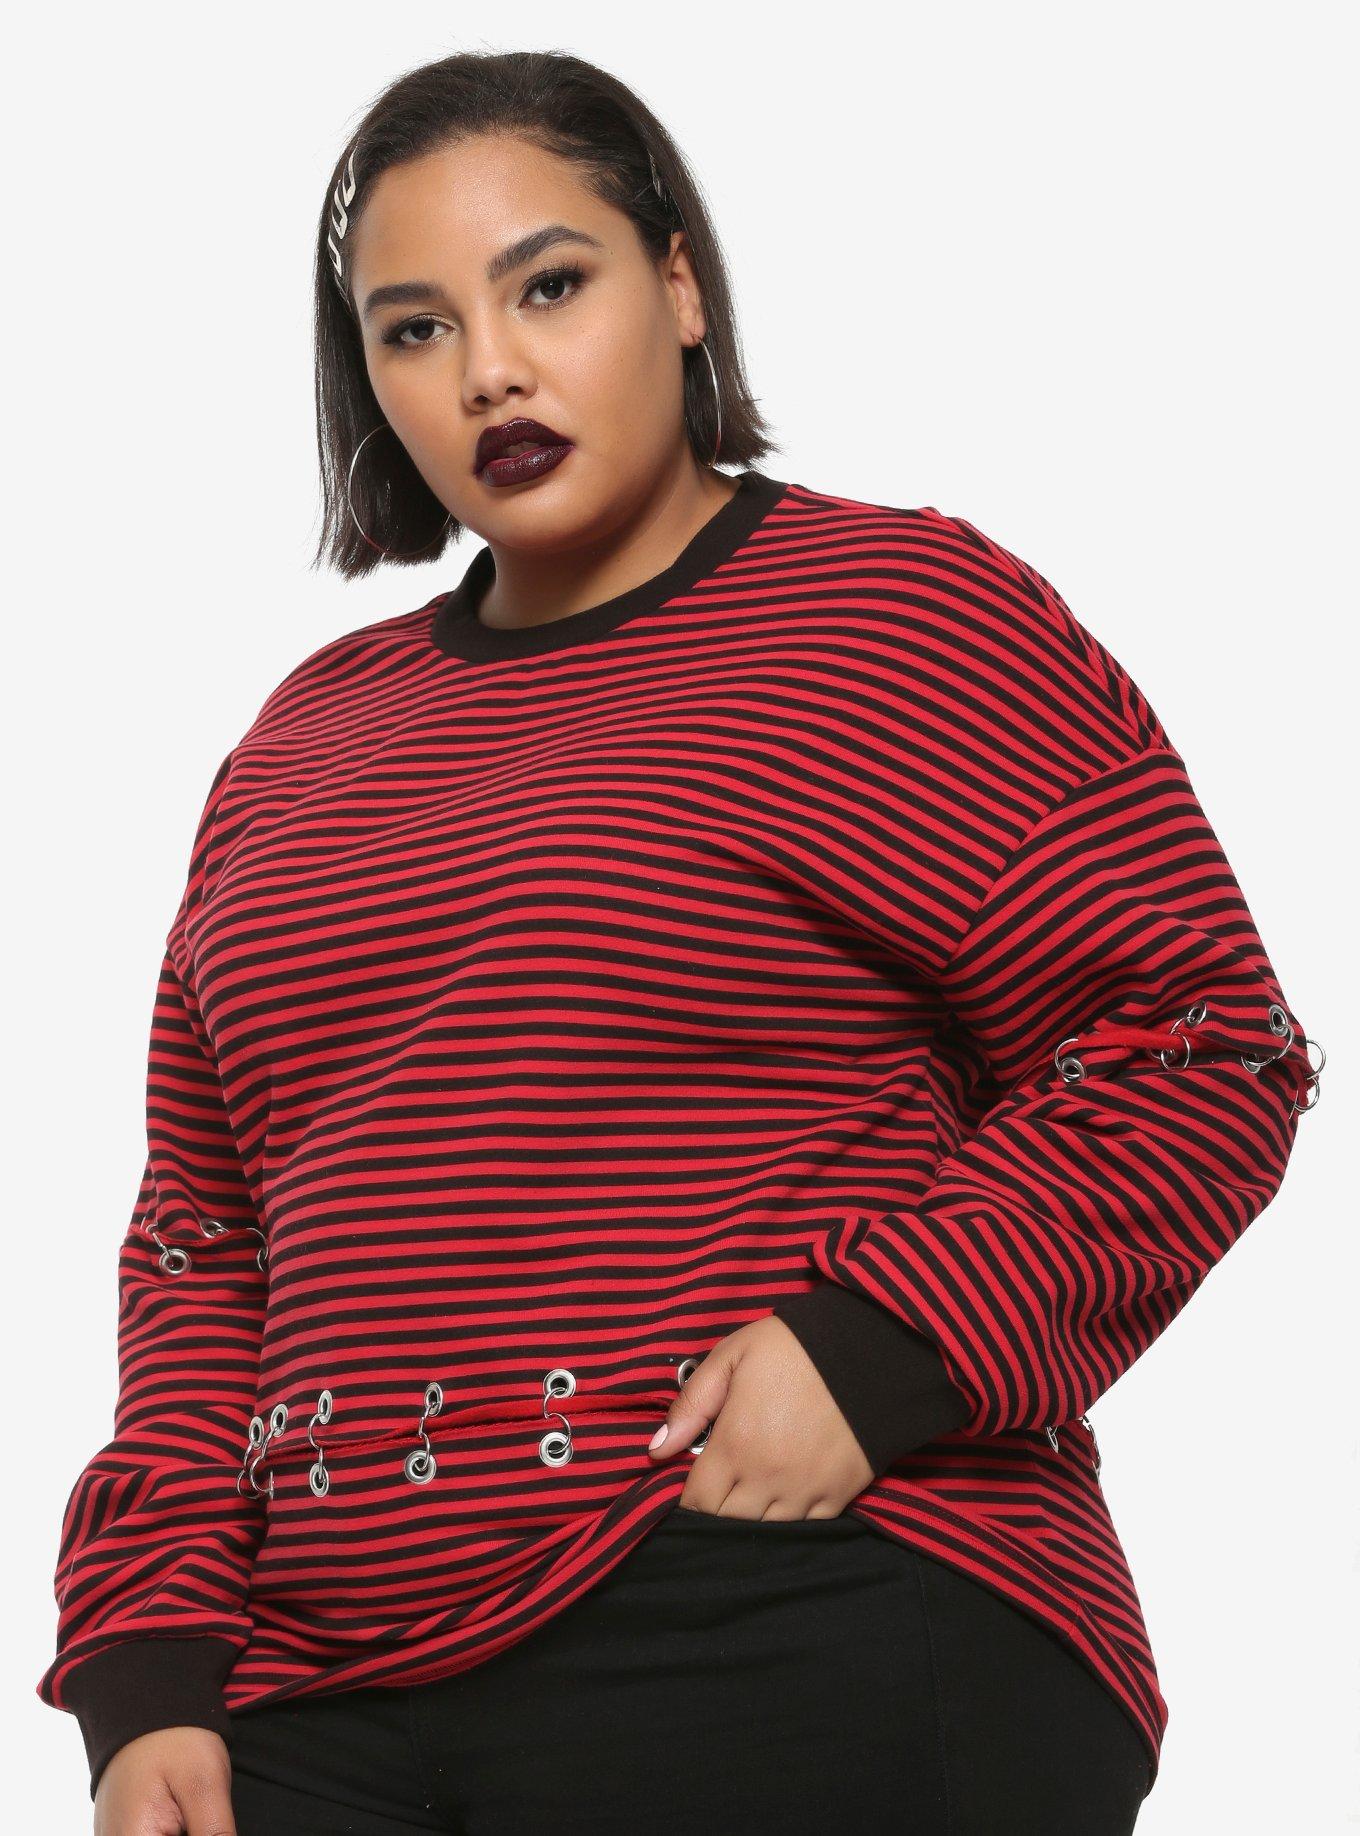 Red & Black Grommets Girls Sweatshirt Plus Size | Hot Topic